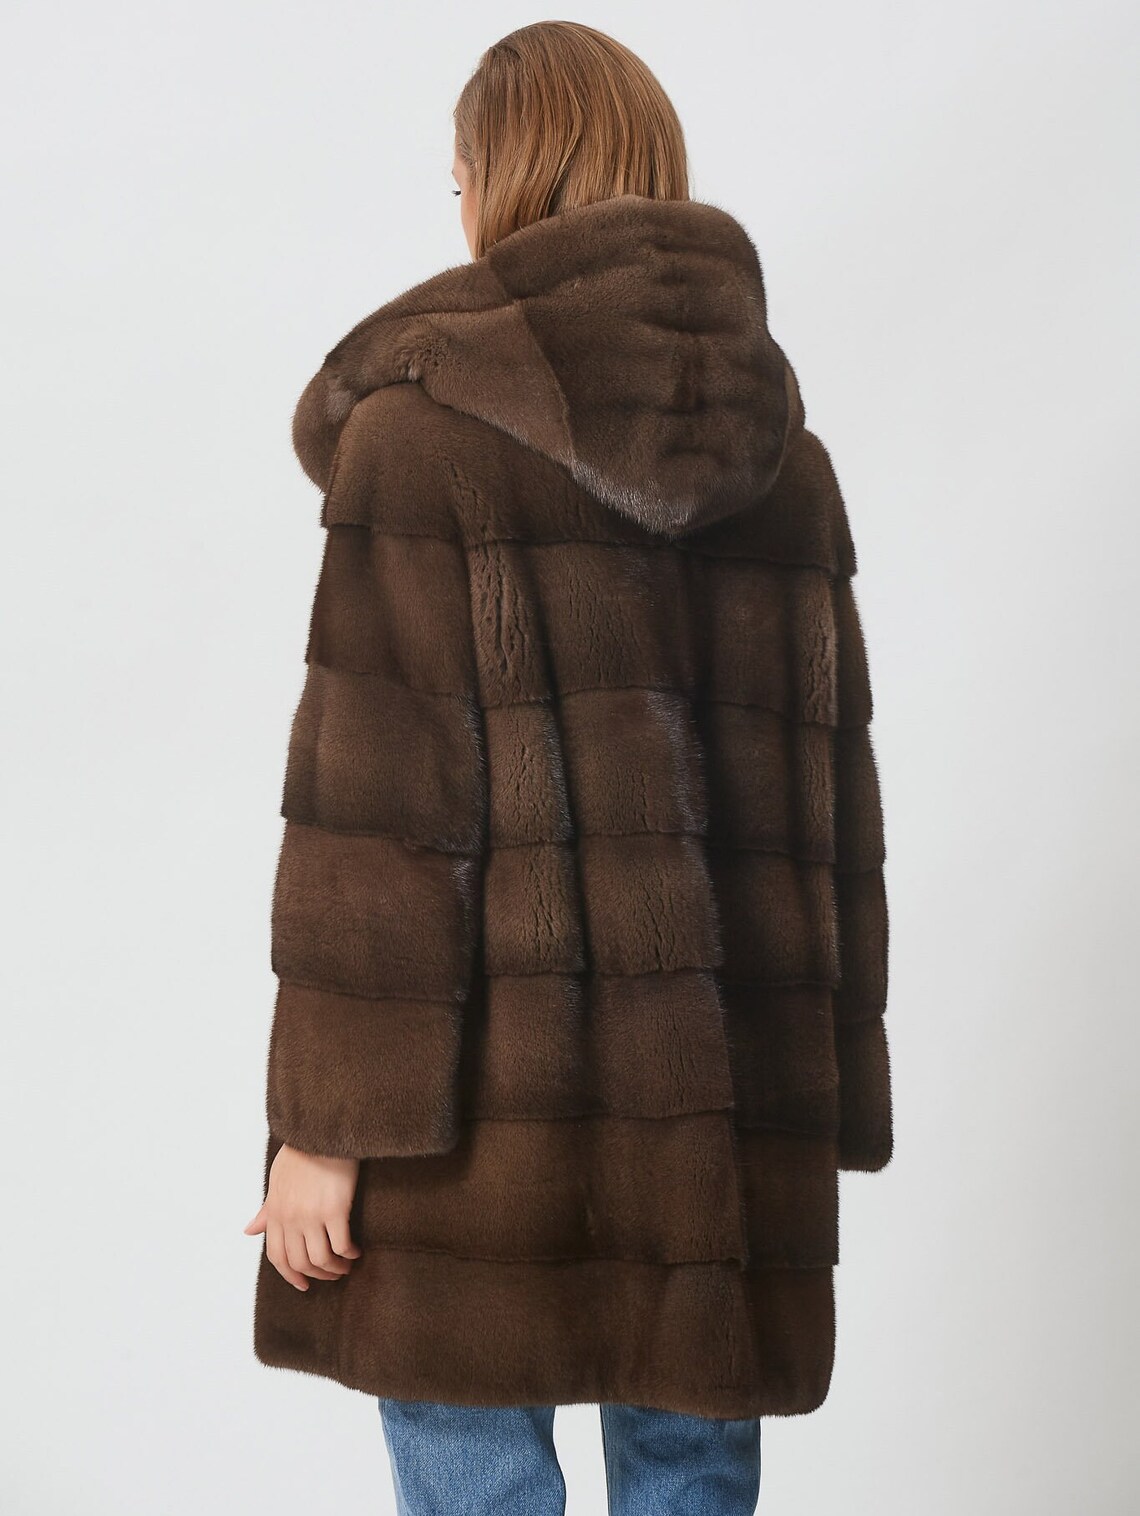 Brown Mink Fur Jacket With Hood Made of 100% Real Fur - Etsy